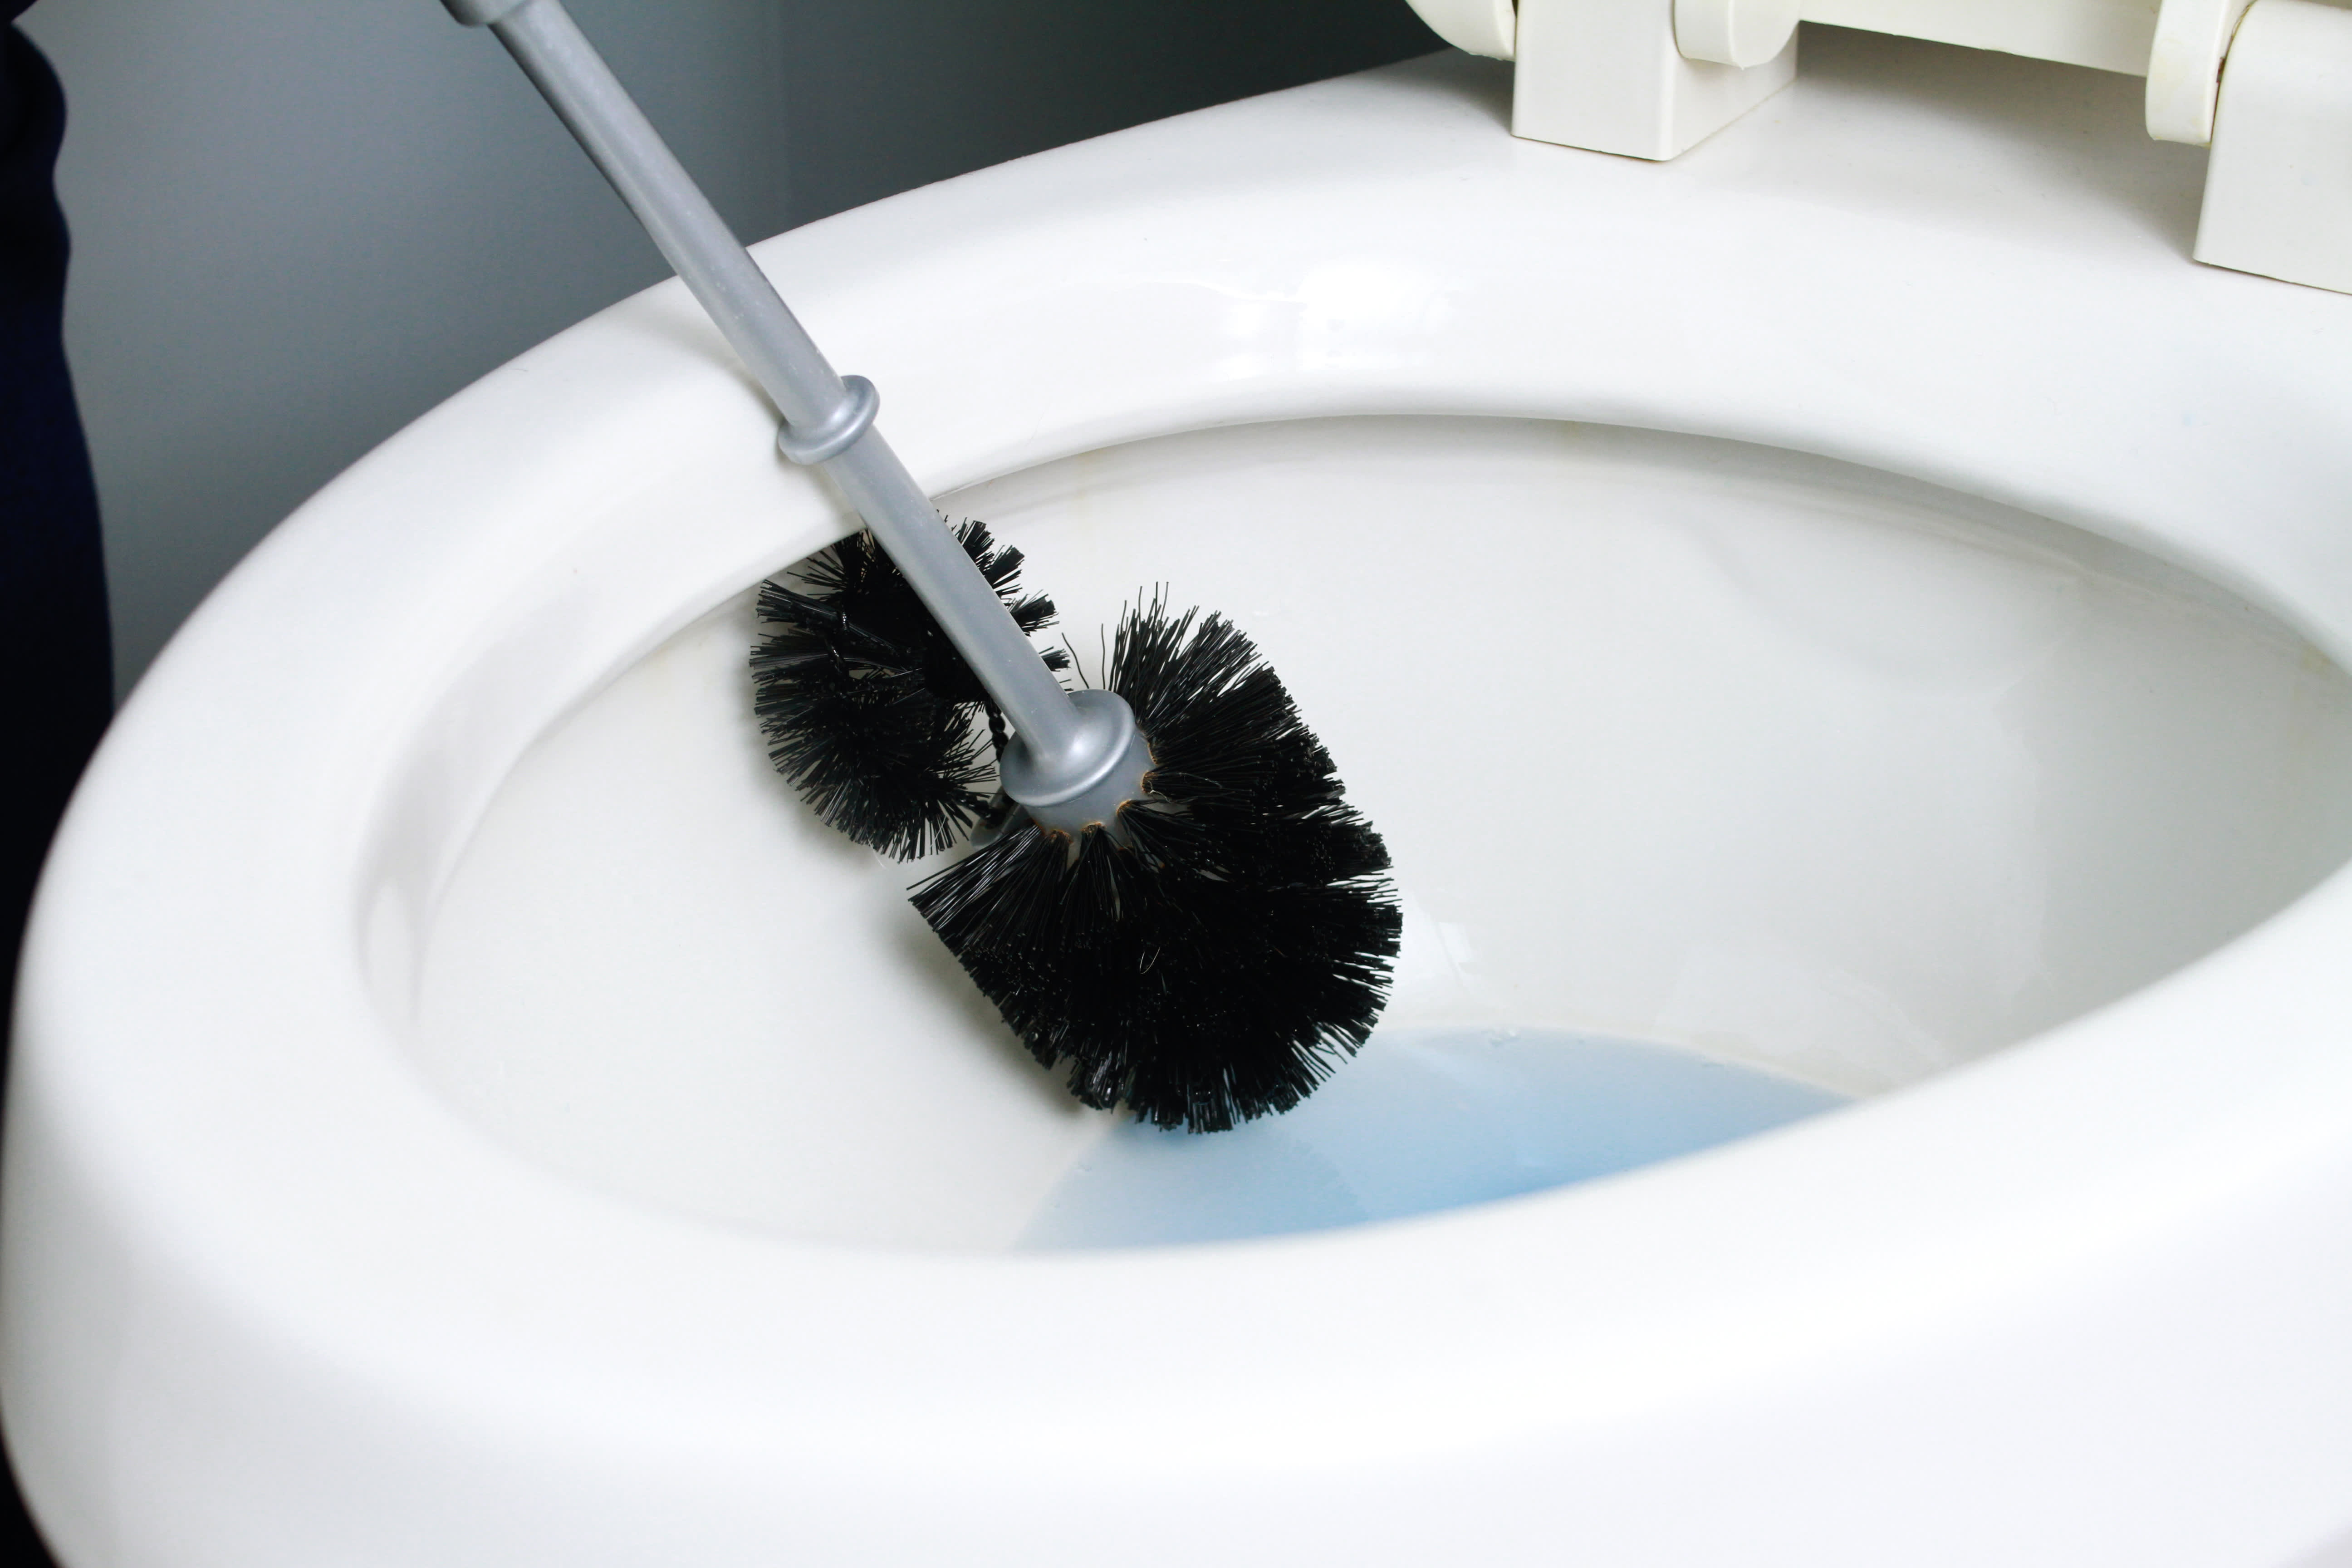 https://cdn.apartmenttherapy.info/image/upload/v1589395354/at/organize-clean/toilet_brush.jpg